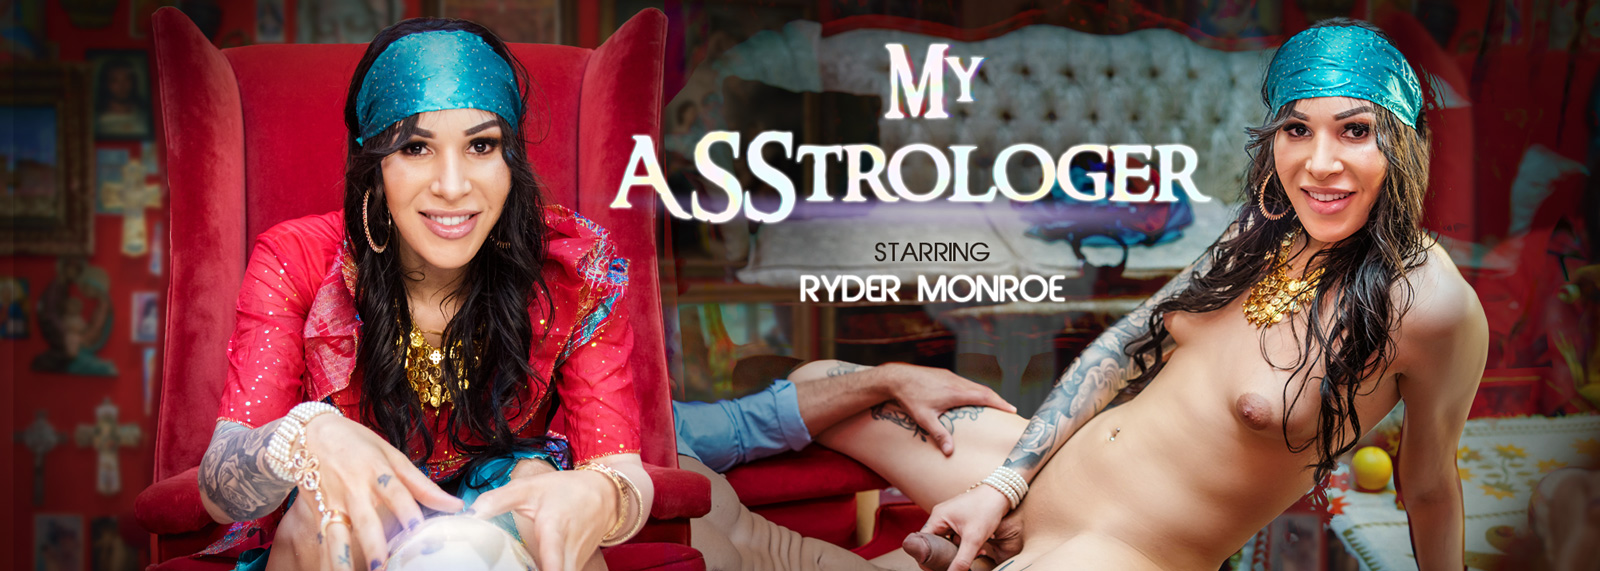 My ASStrologer - VR Porn Video, Starring: Ryder Monroe VR